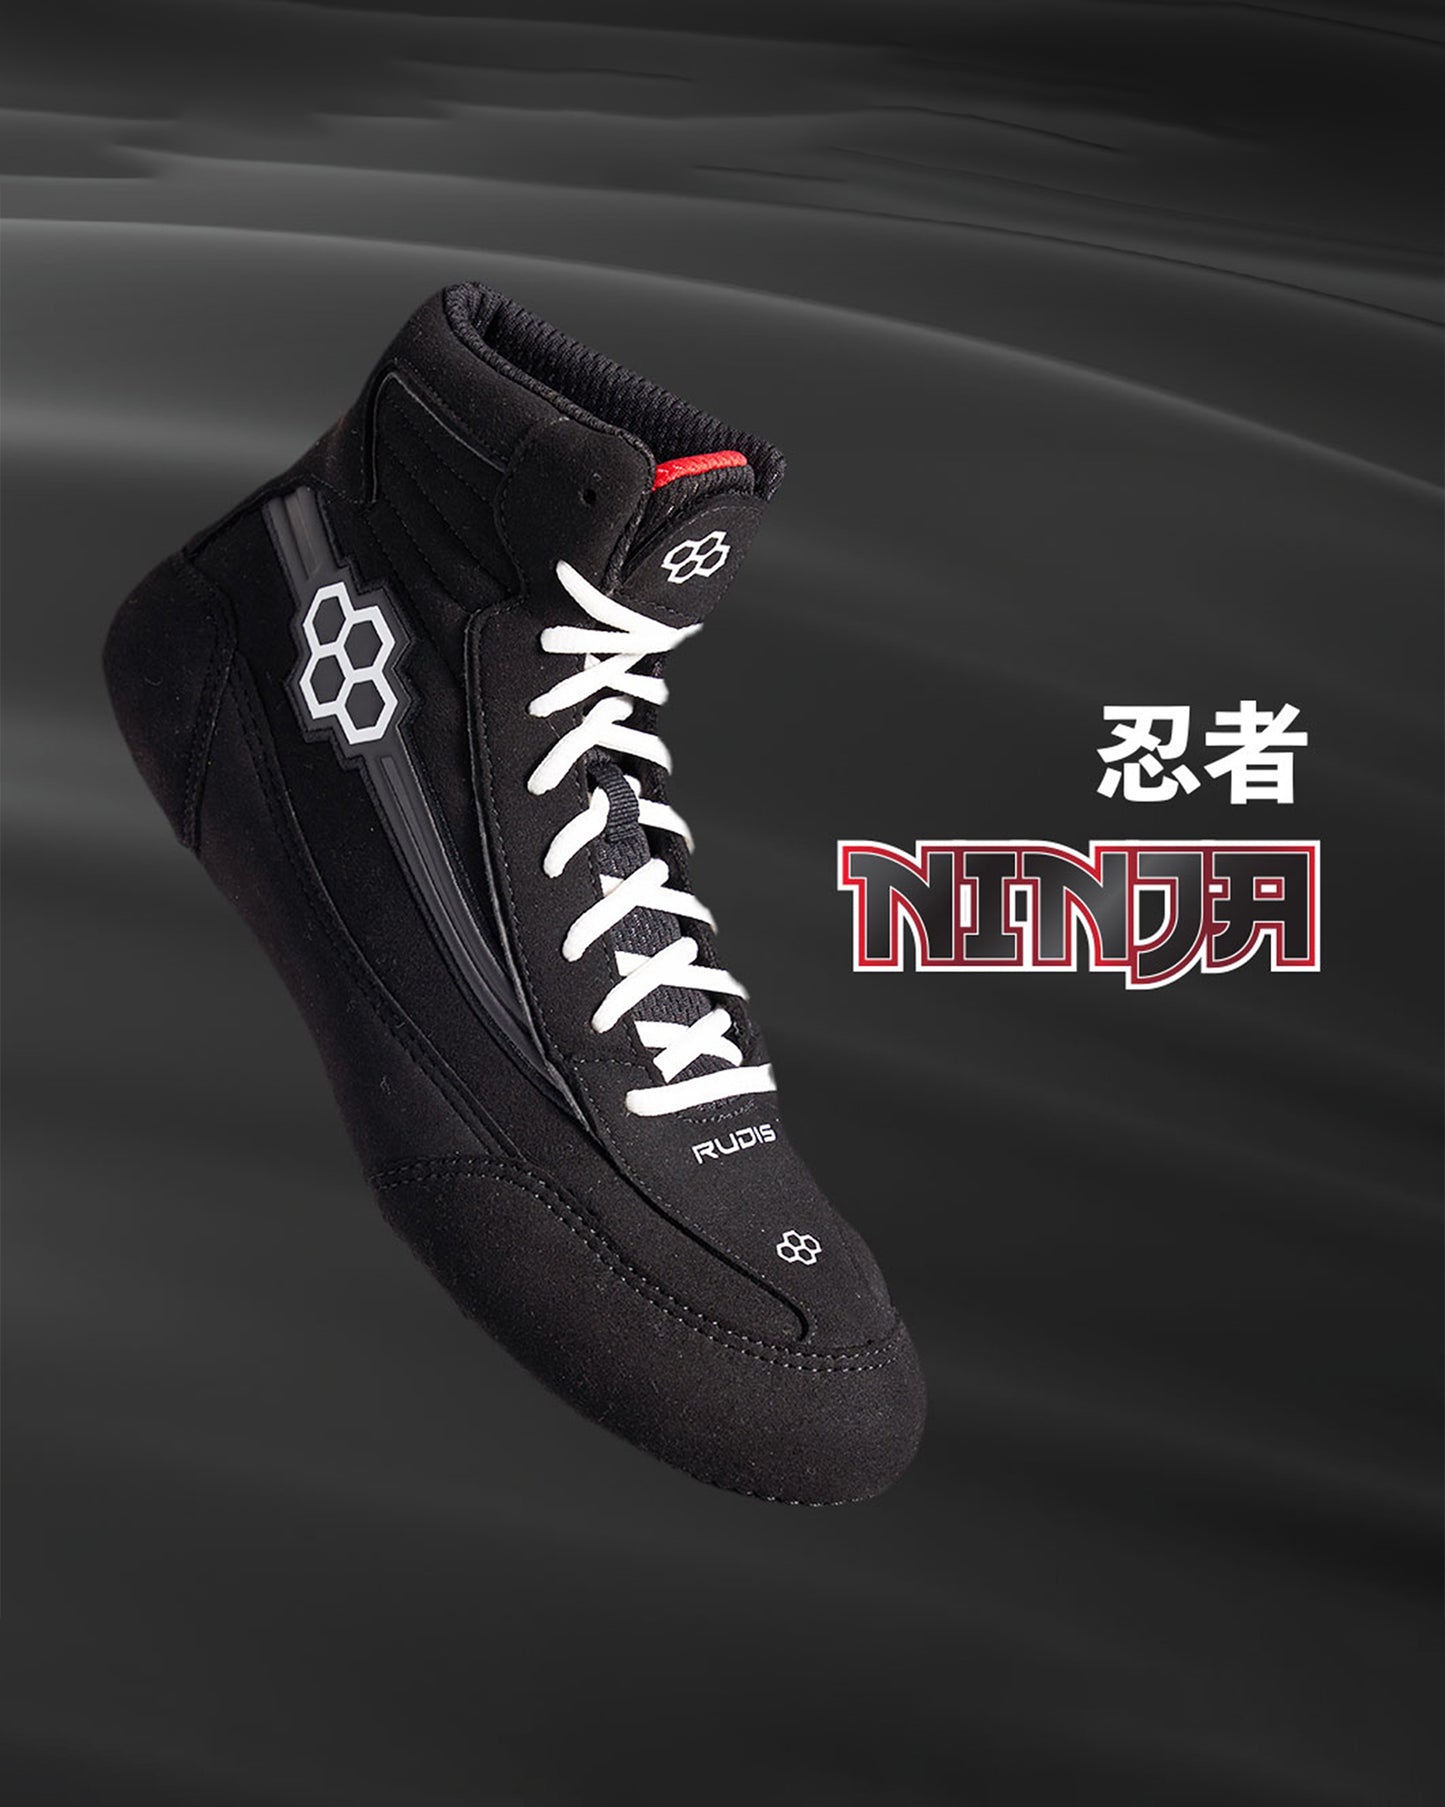 RUDIS Ninety-5 Adult Wrestling Shoes - Ninja